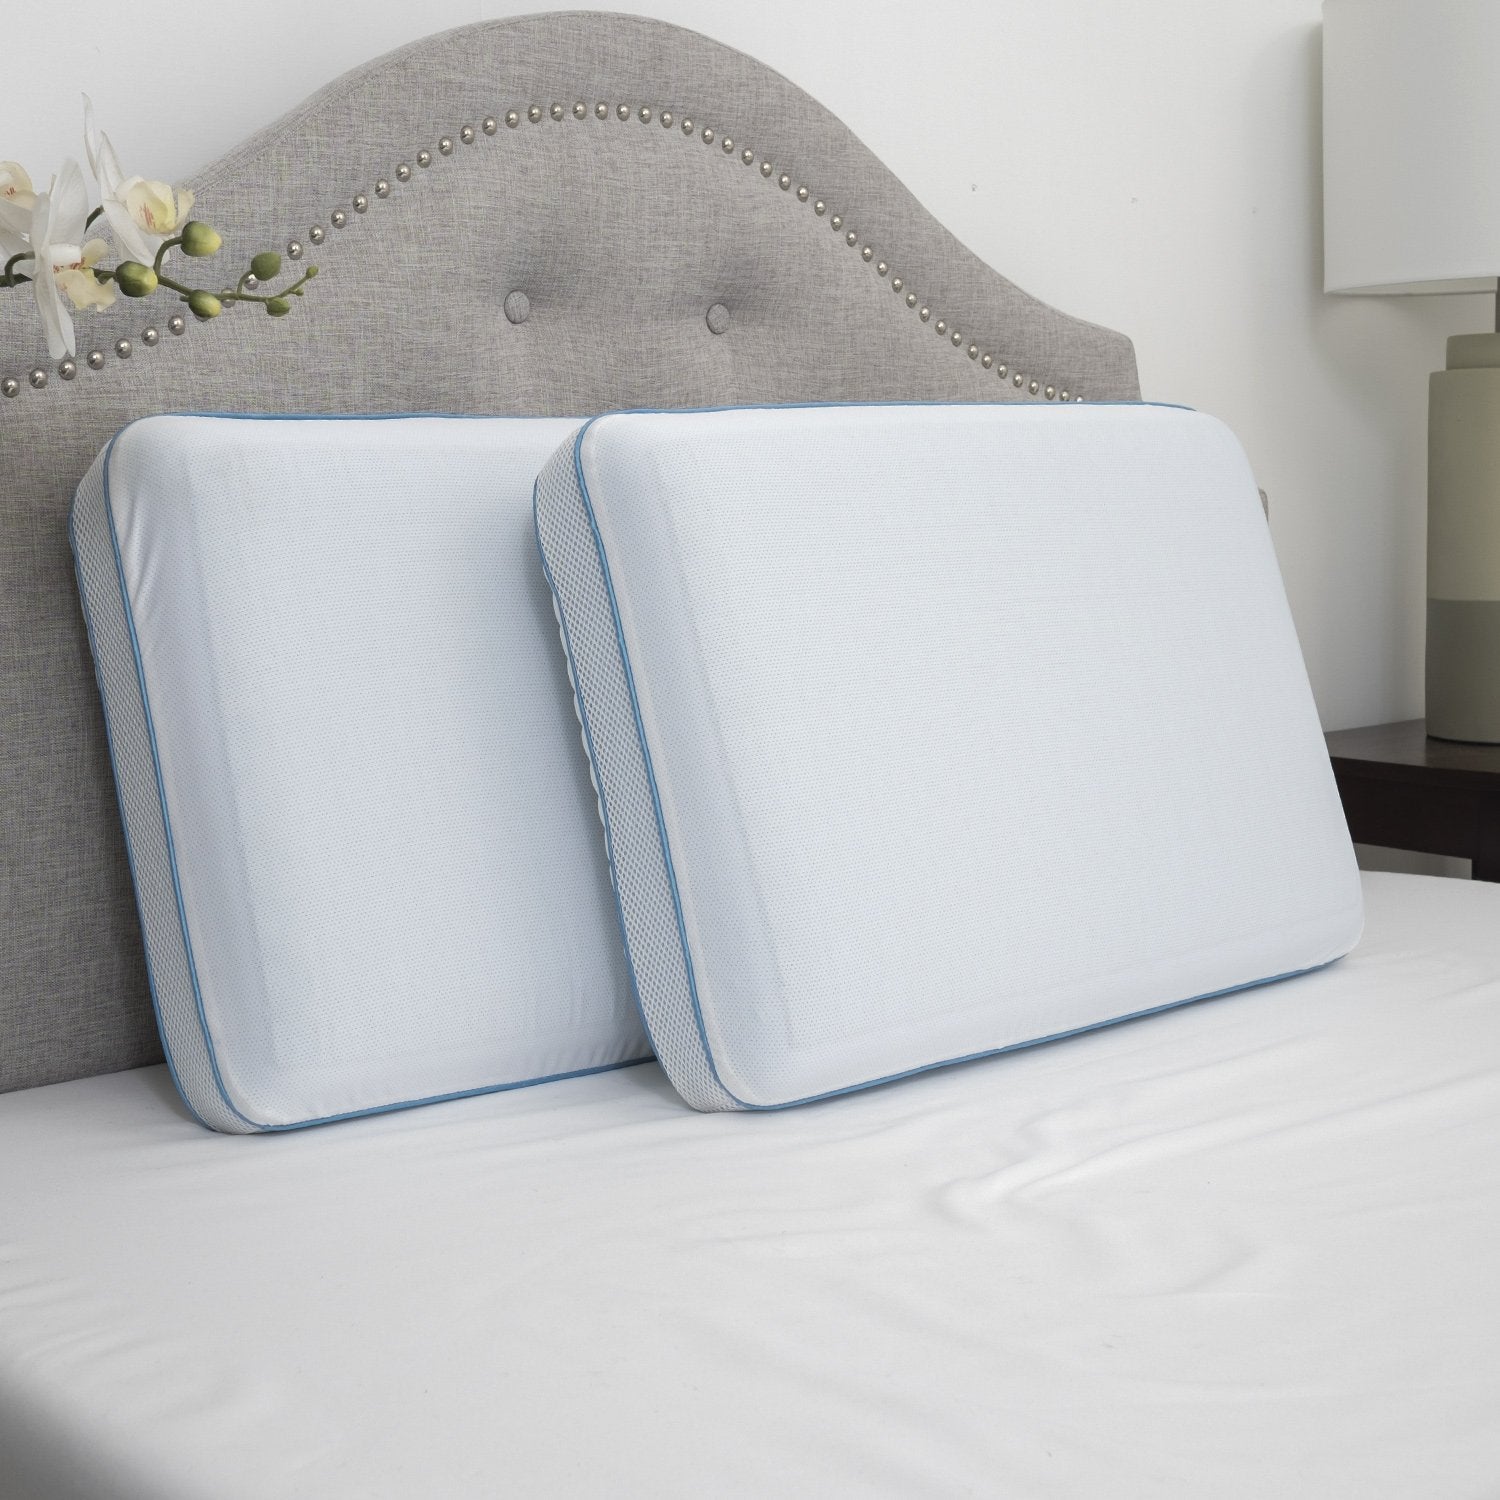 Cooling Gel Memory Foam Bed Pillow 2-Pack